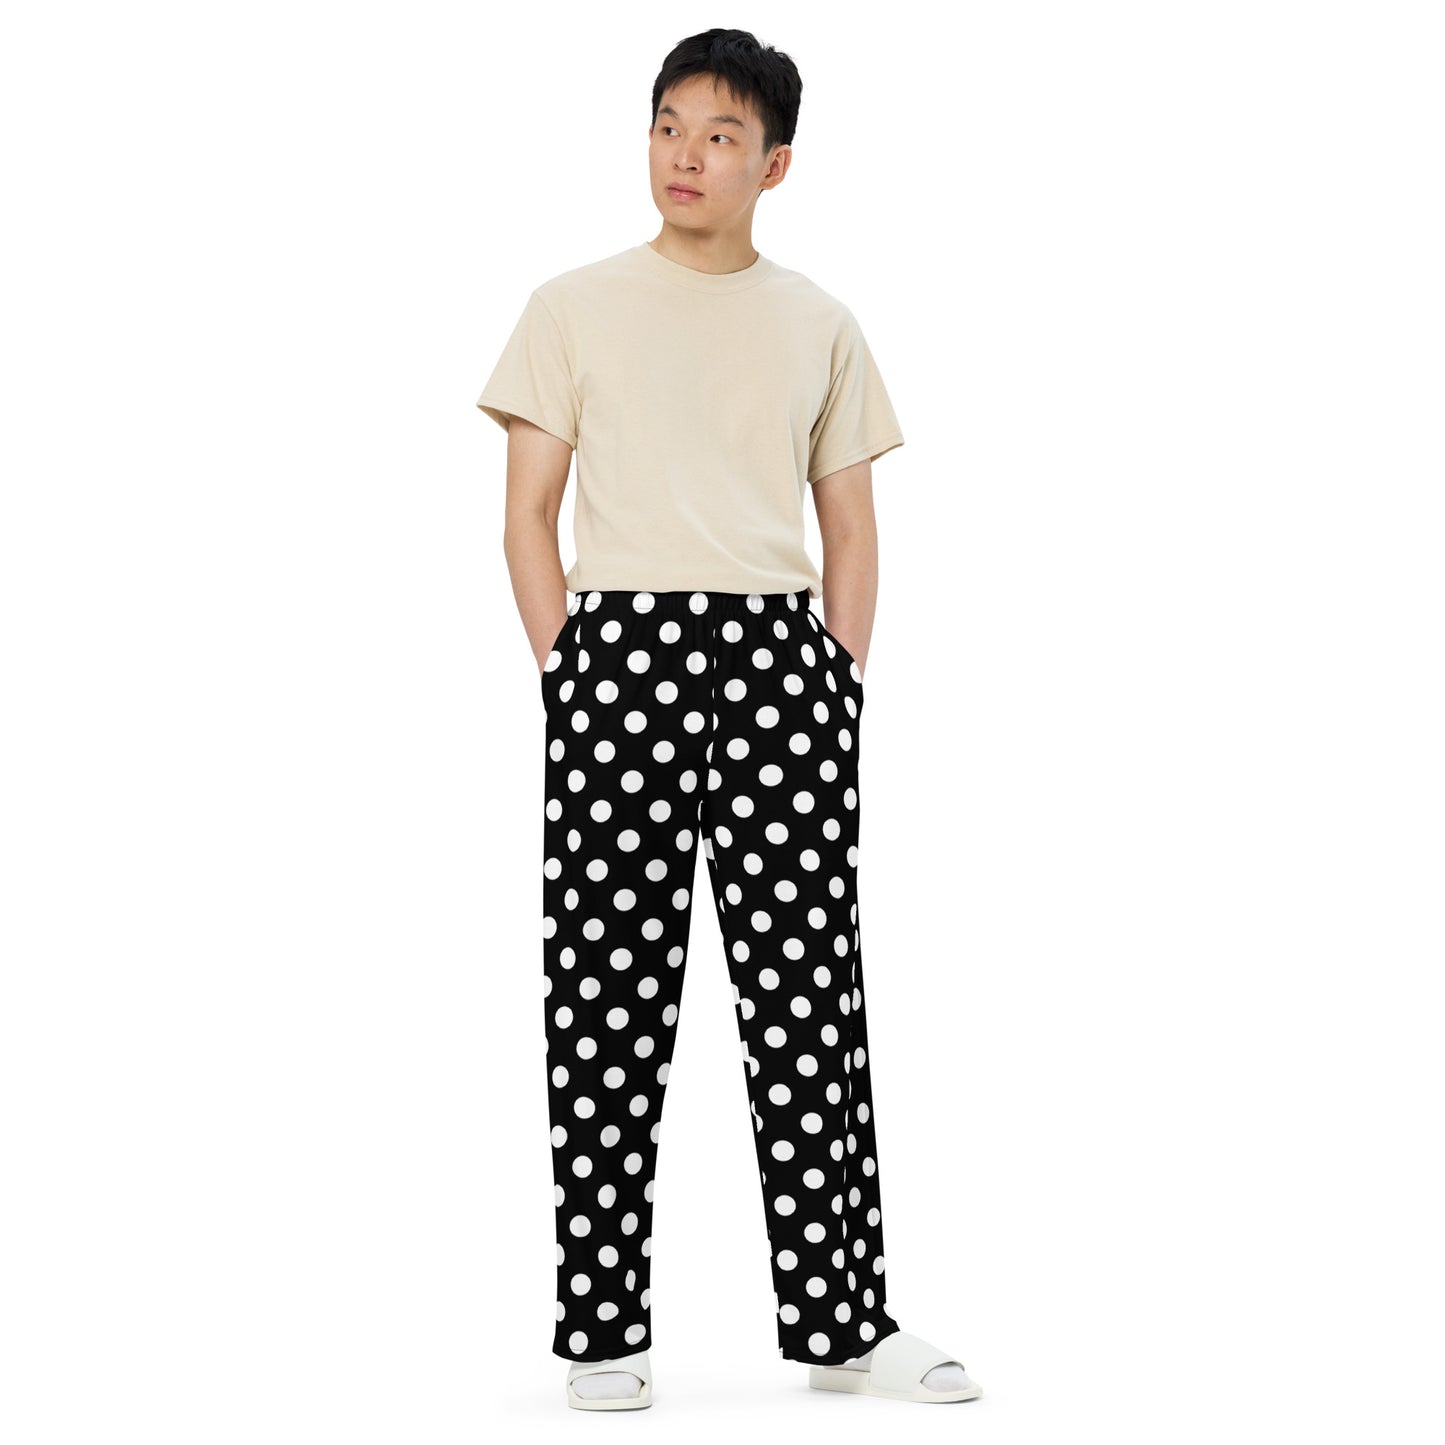 Polka Dots Lounge Pants with Pockets, Black White Unisex Men Women Wide Leg Sweatpants PJ Pajamas Comfy Plus Size Drawstring Yoga